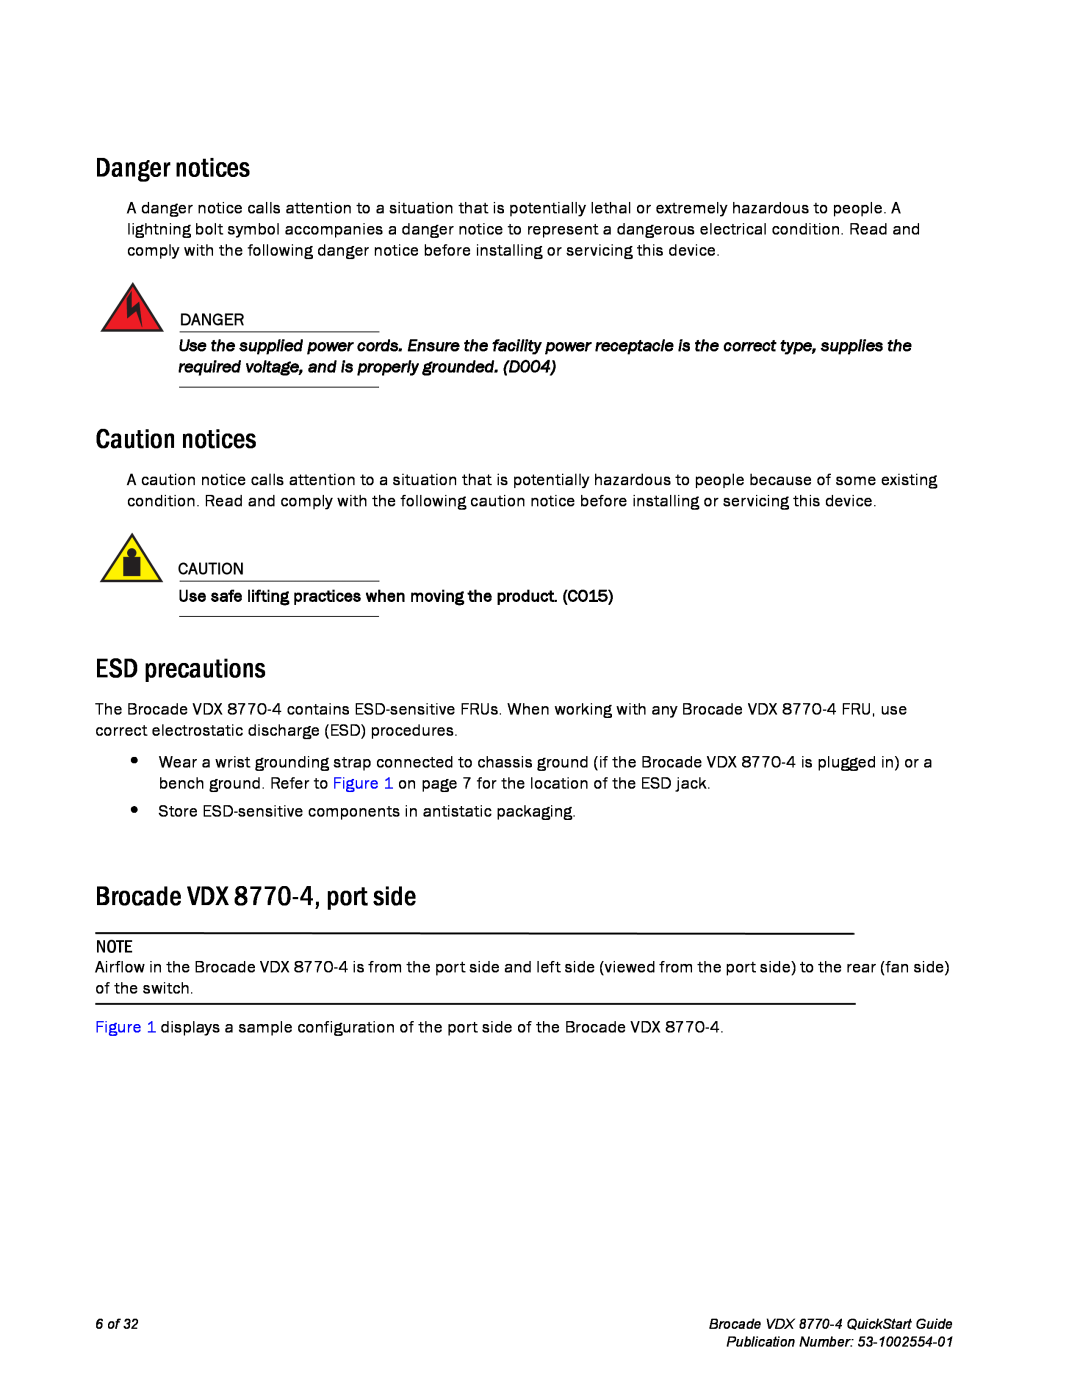 Brocade Communications Systems Danger notices, Caution notices, ESD precautions, Brocade VDX 8770-4, port side 